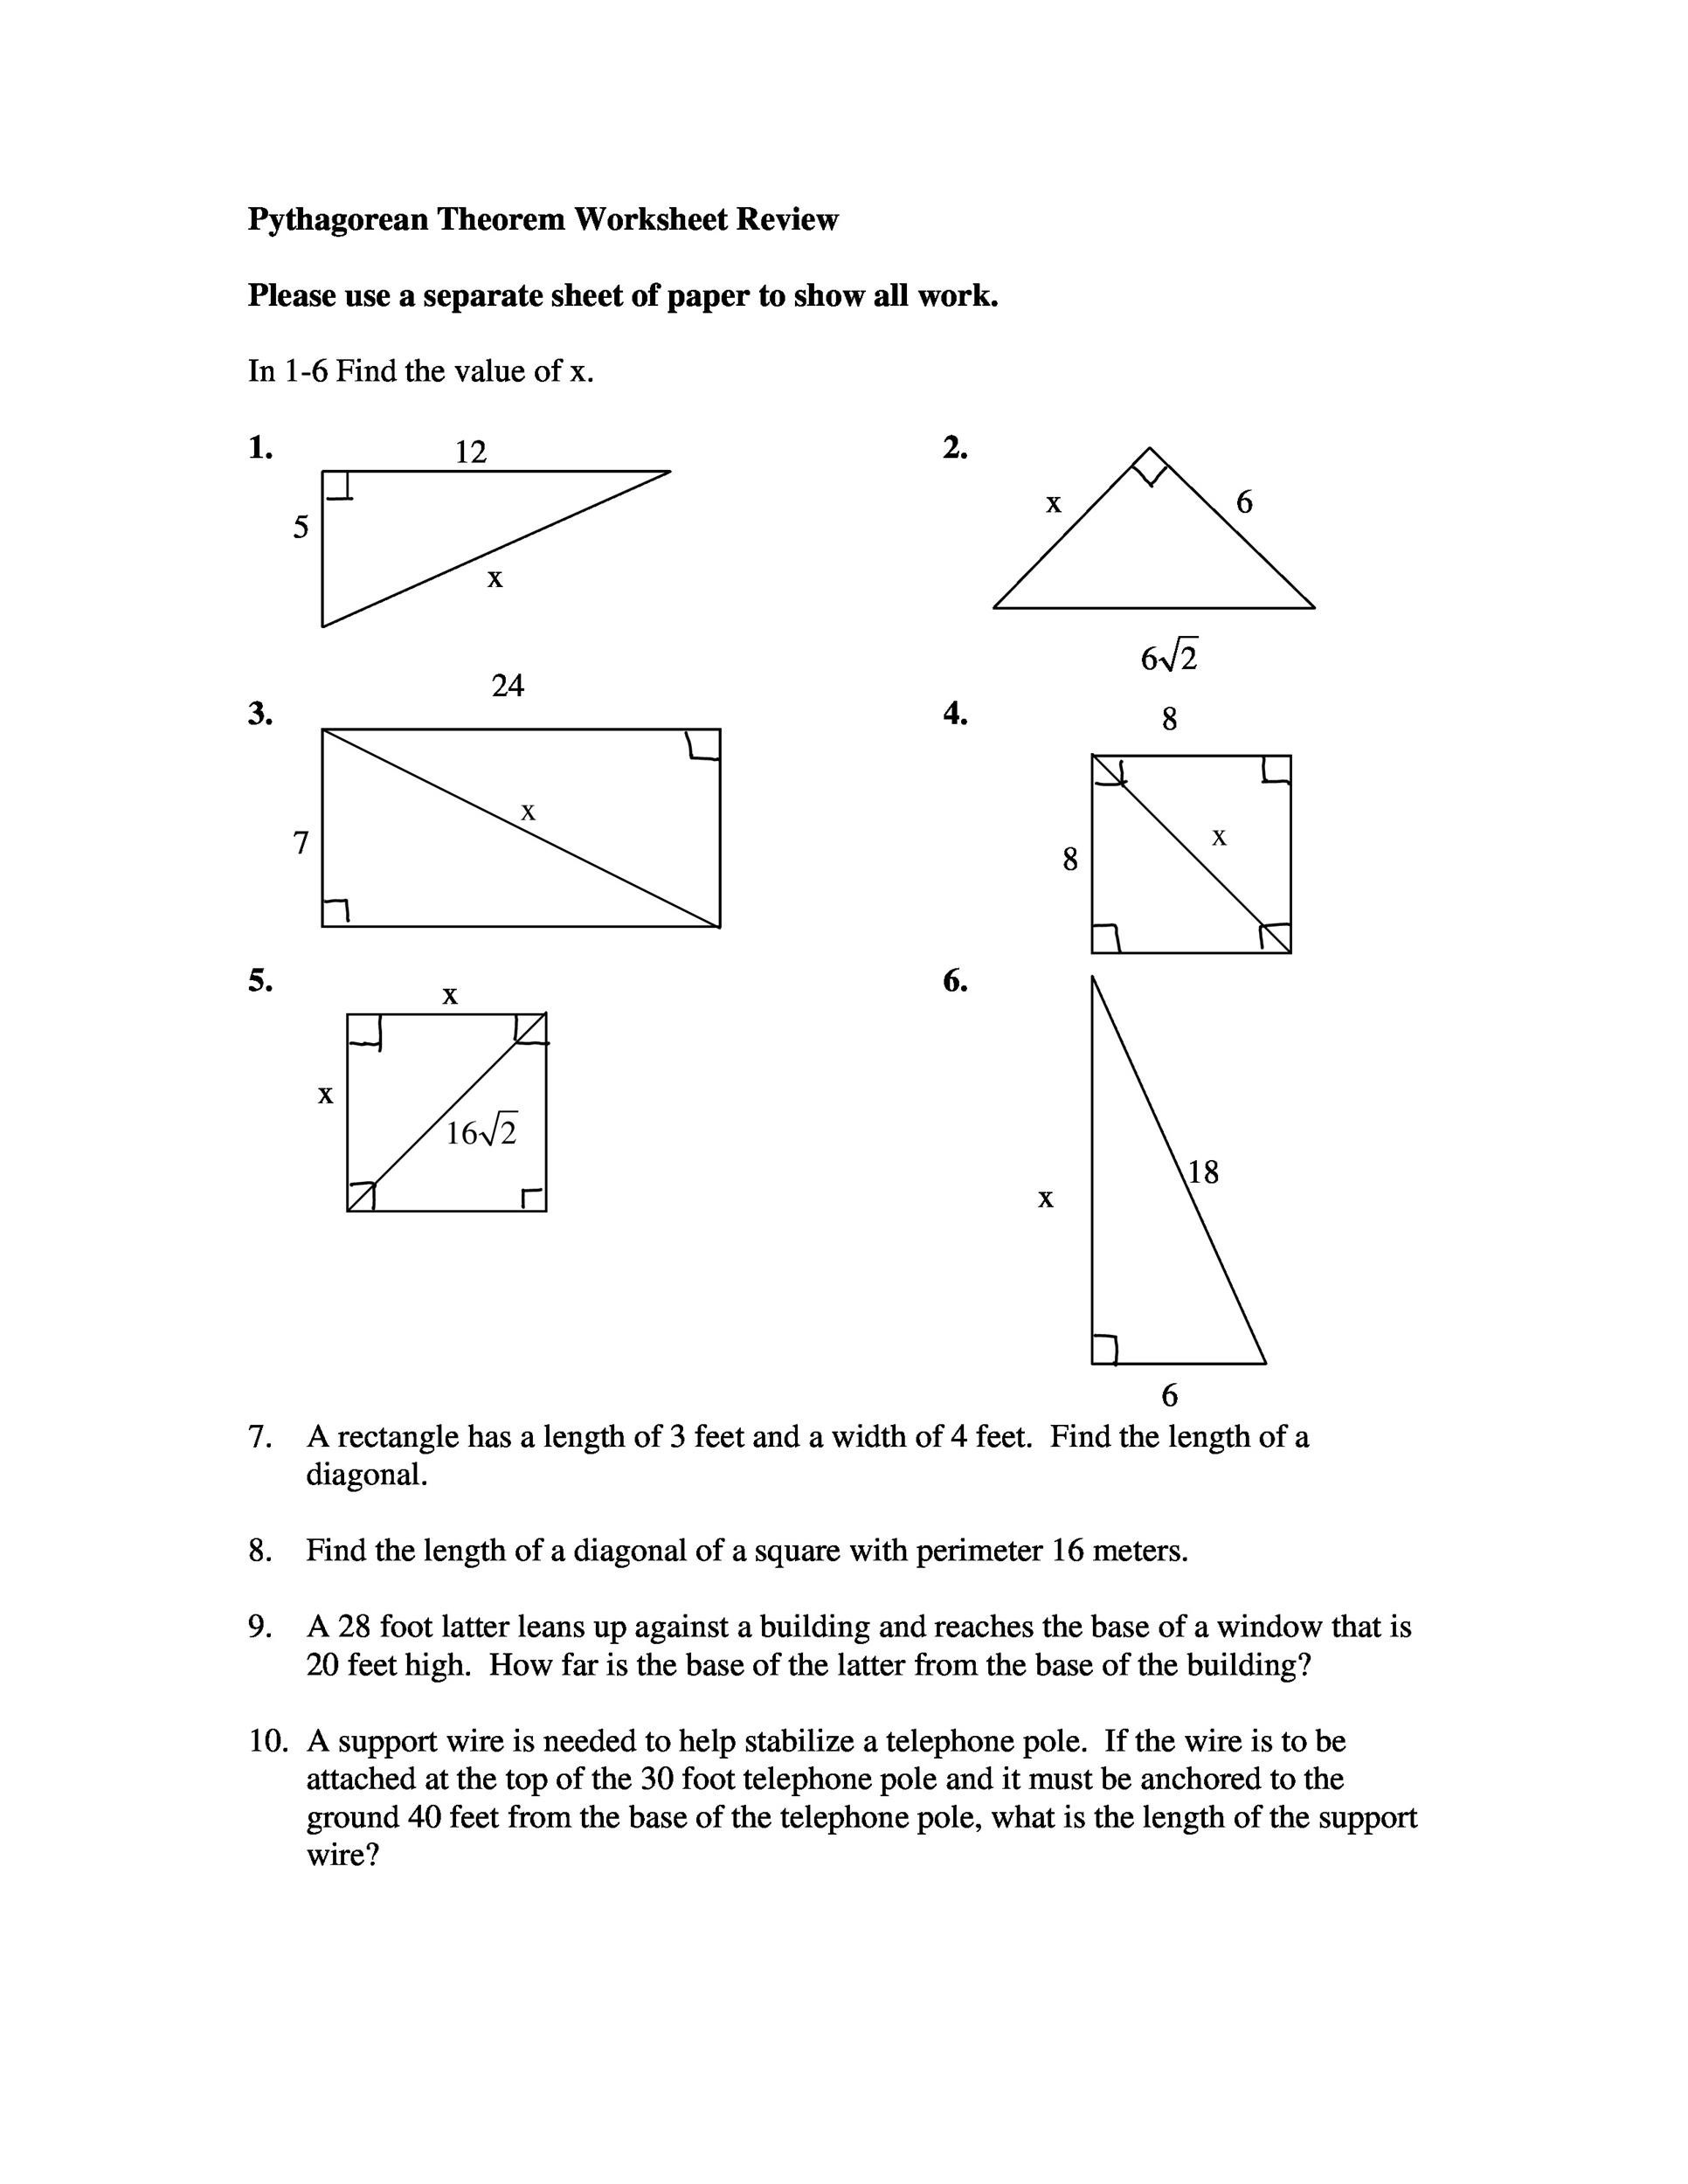 converse of the pythagorean theorem worksheet pdf